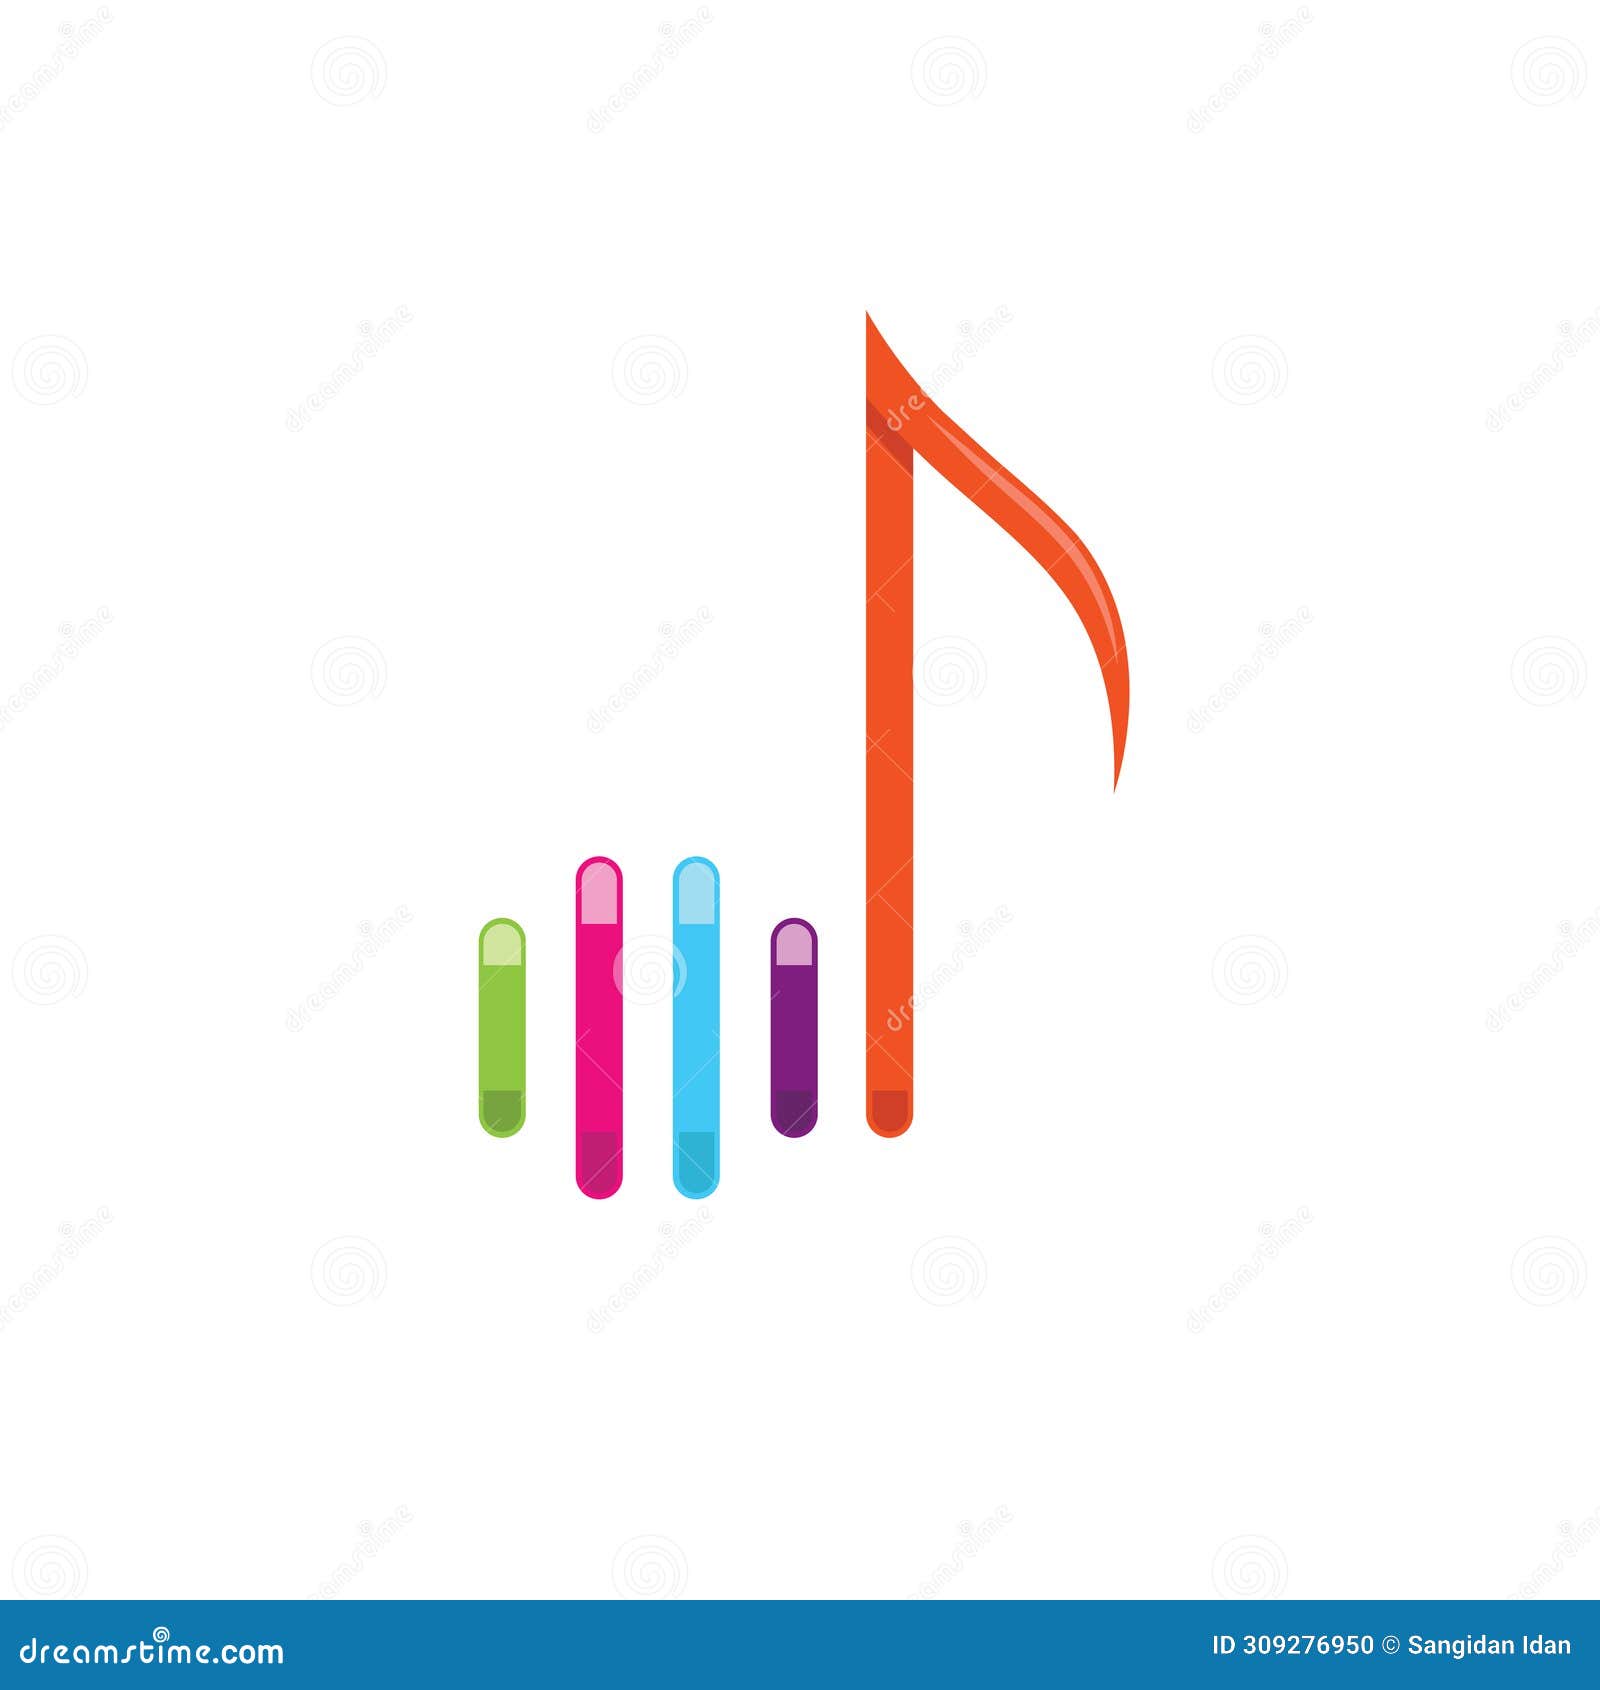 quaver music note icon   concept 